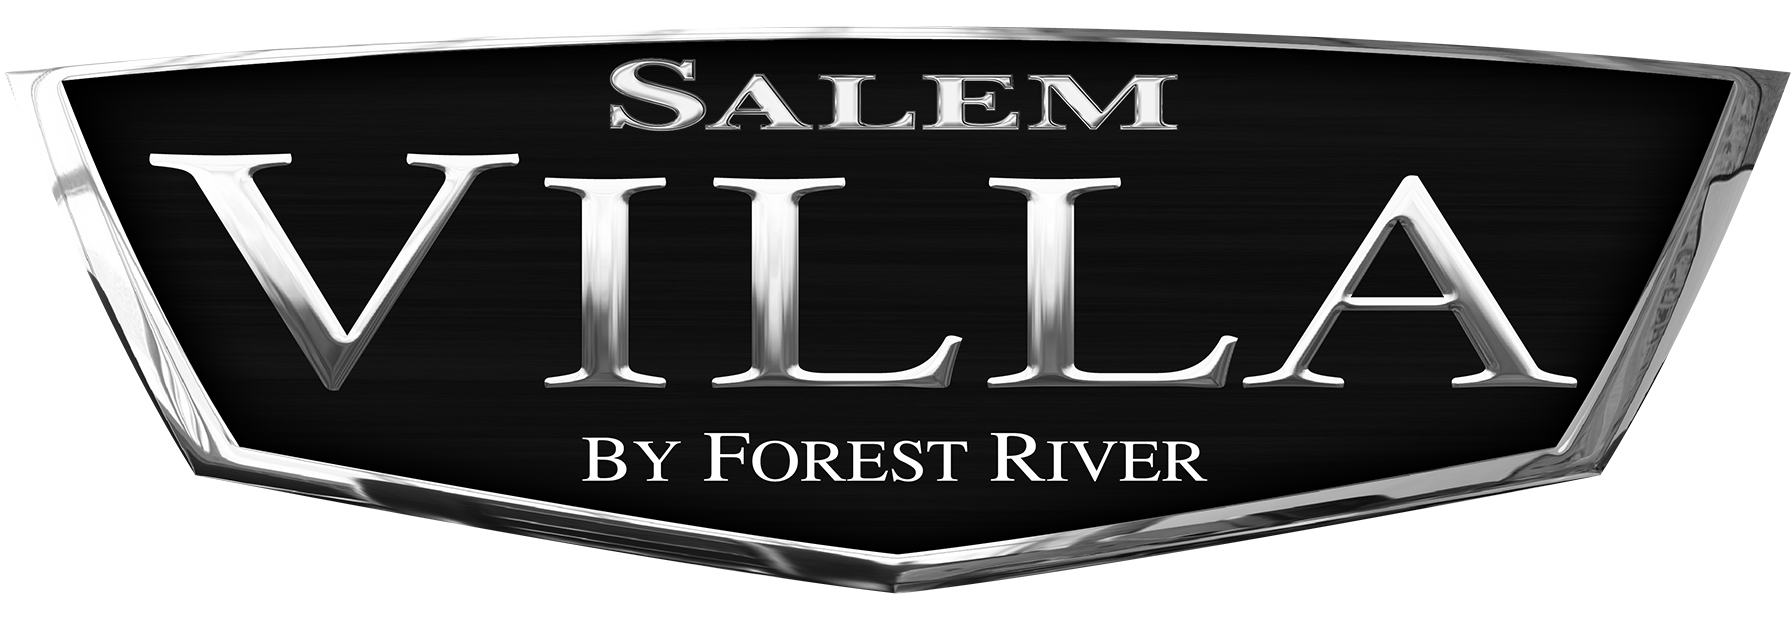 Johnson's RV and Auto Sells Salem Villa Series in Sault Ste. Marie, ON